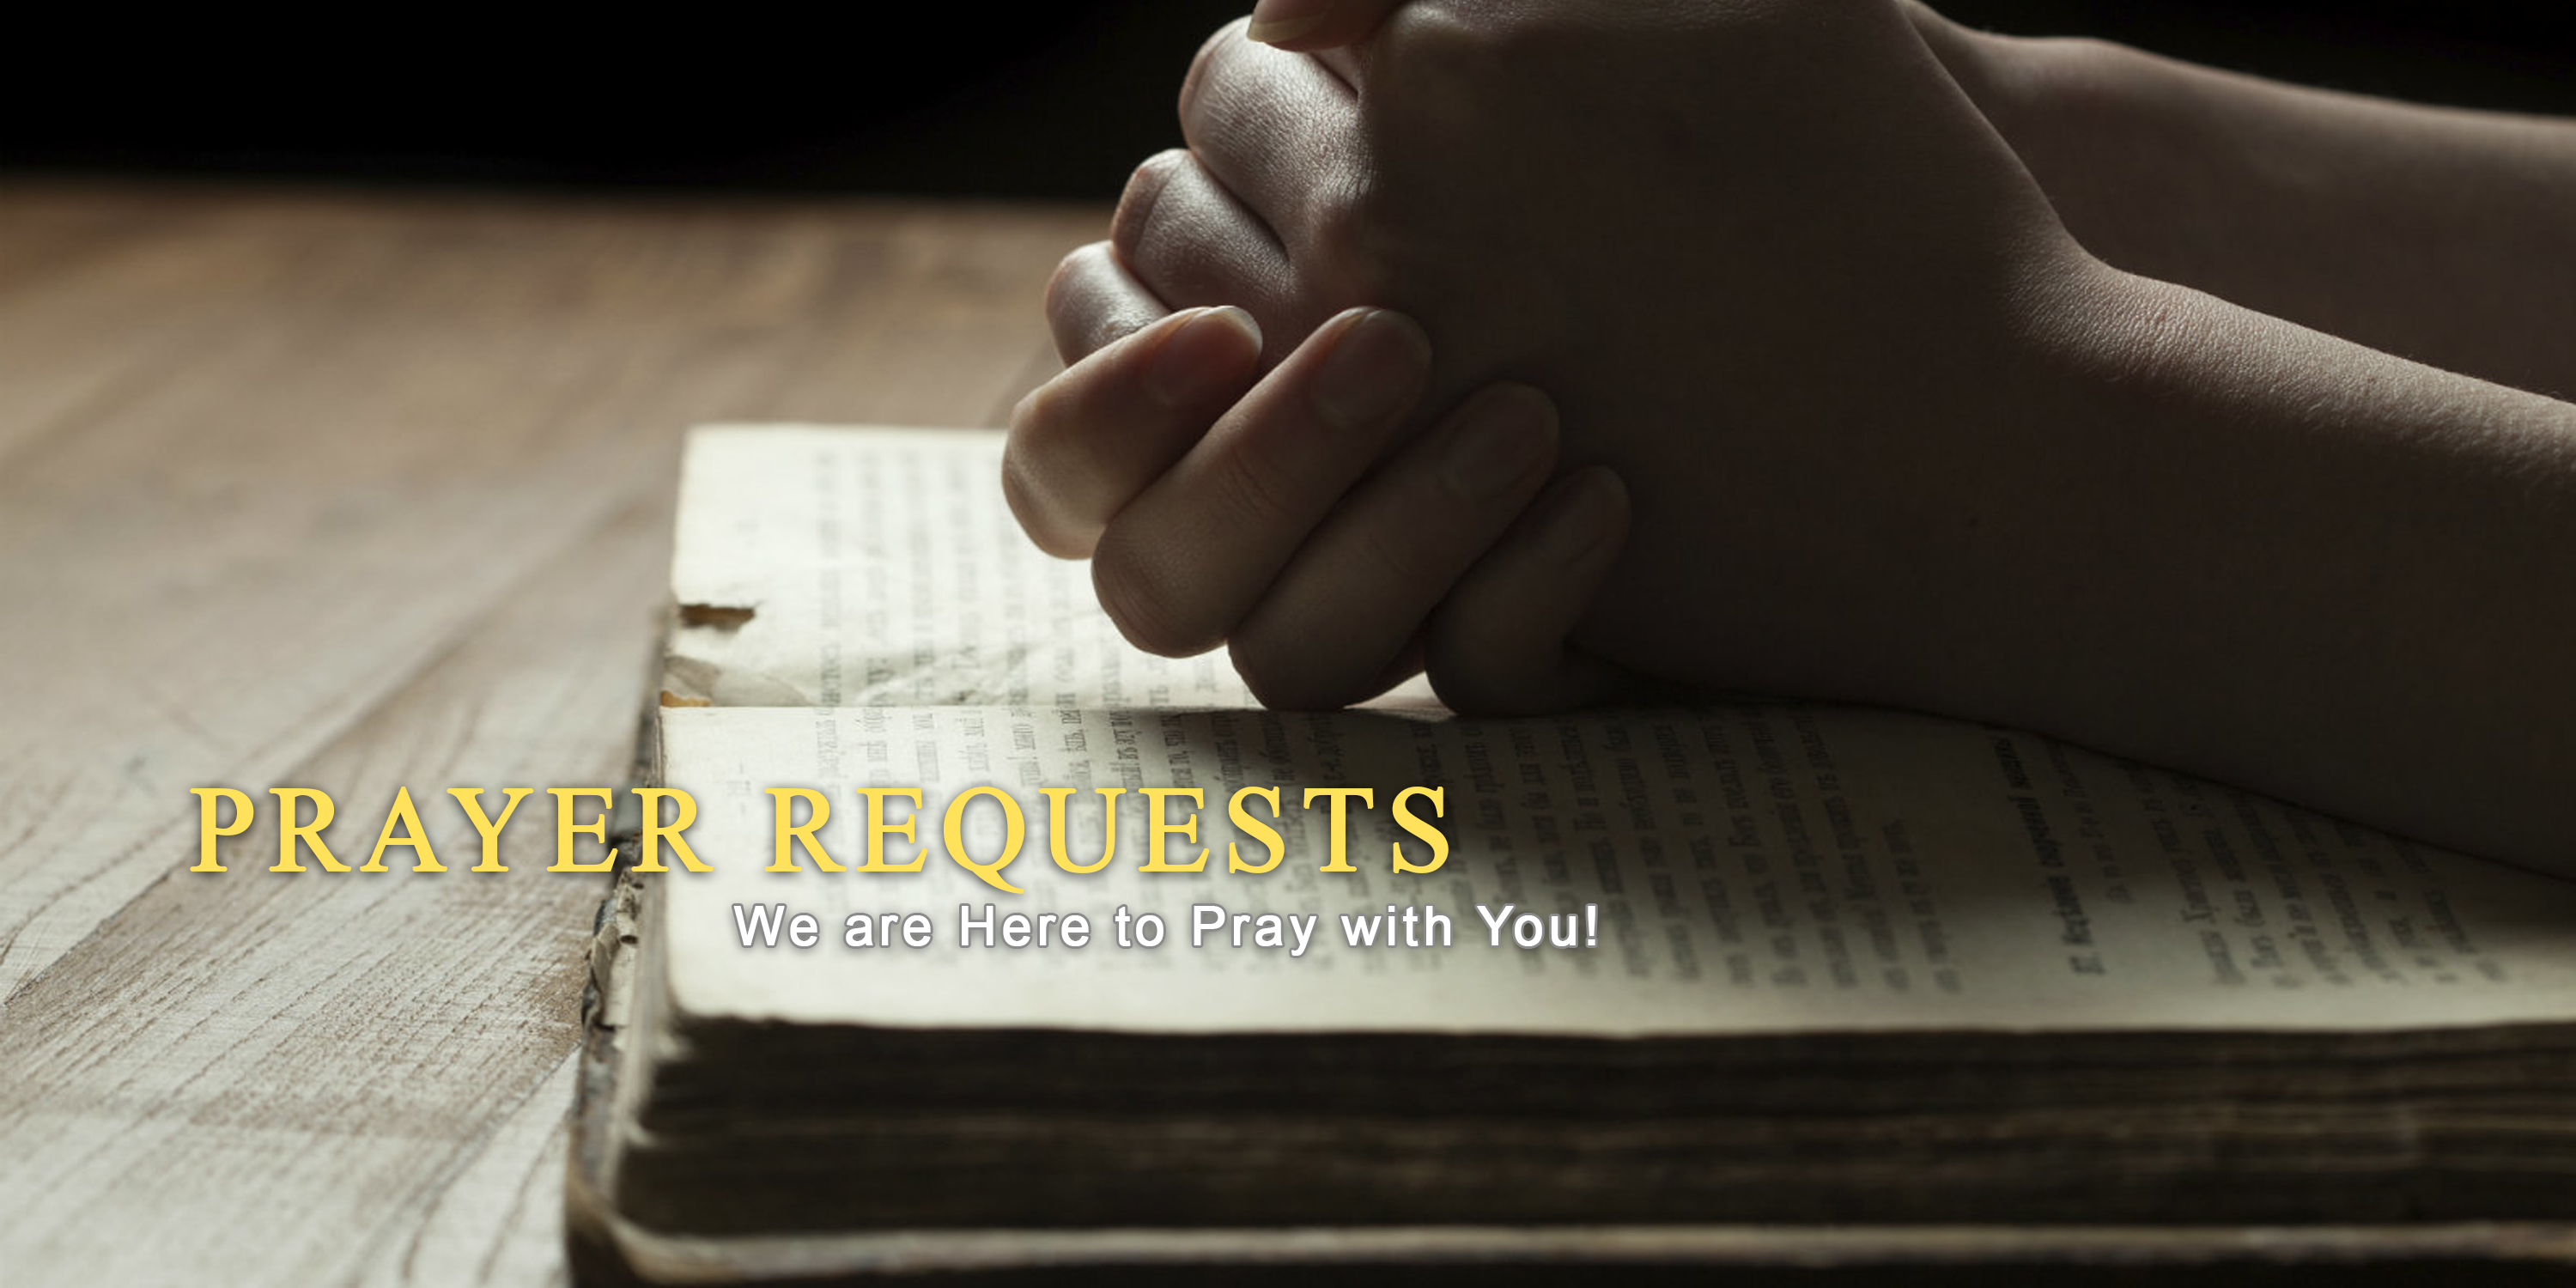 PrayerRequests.jpg